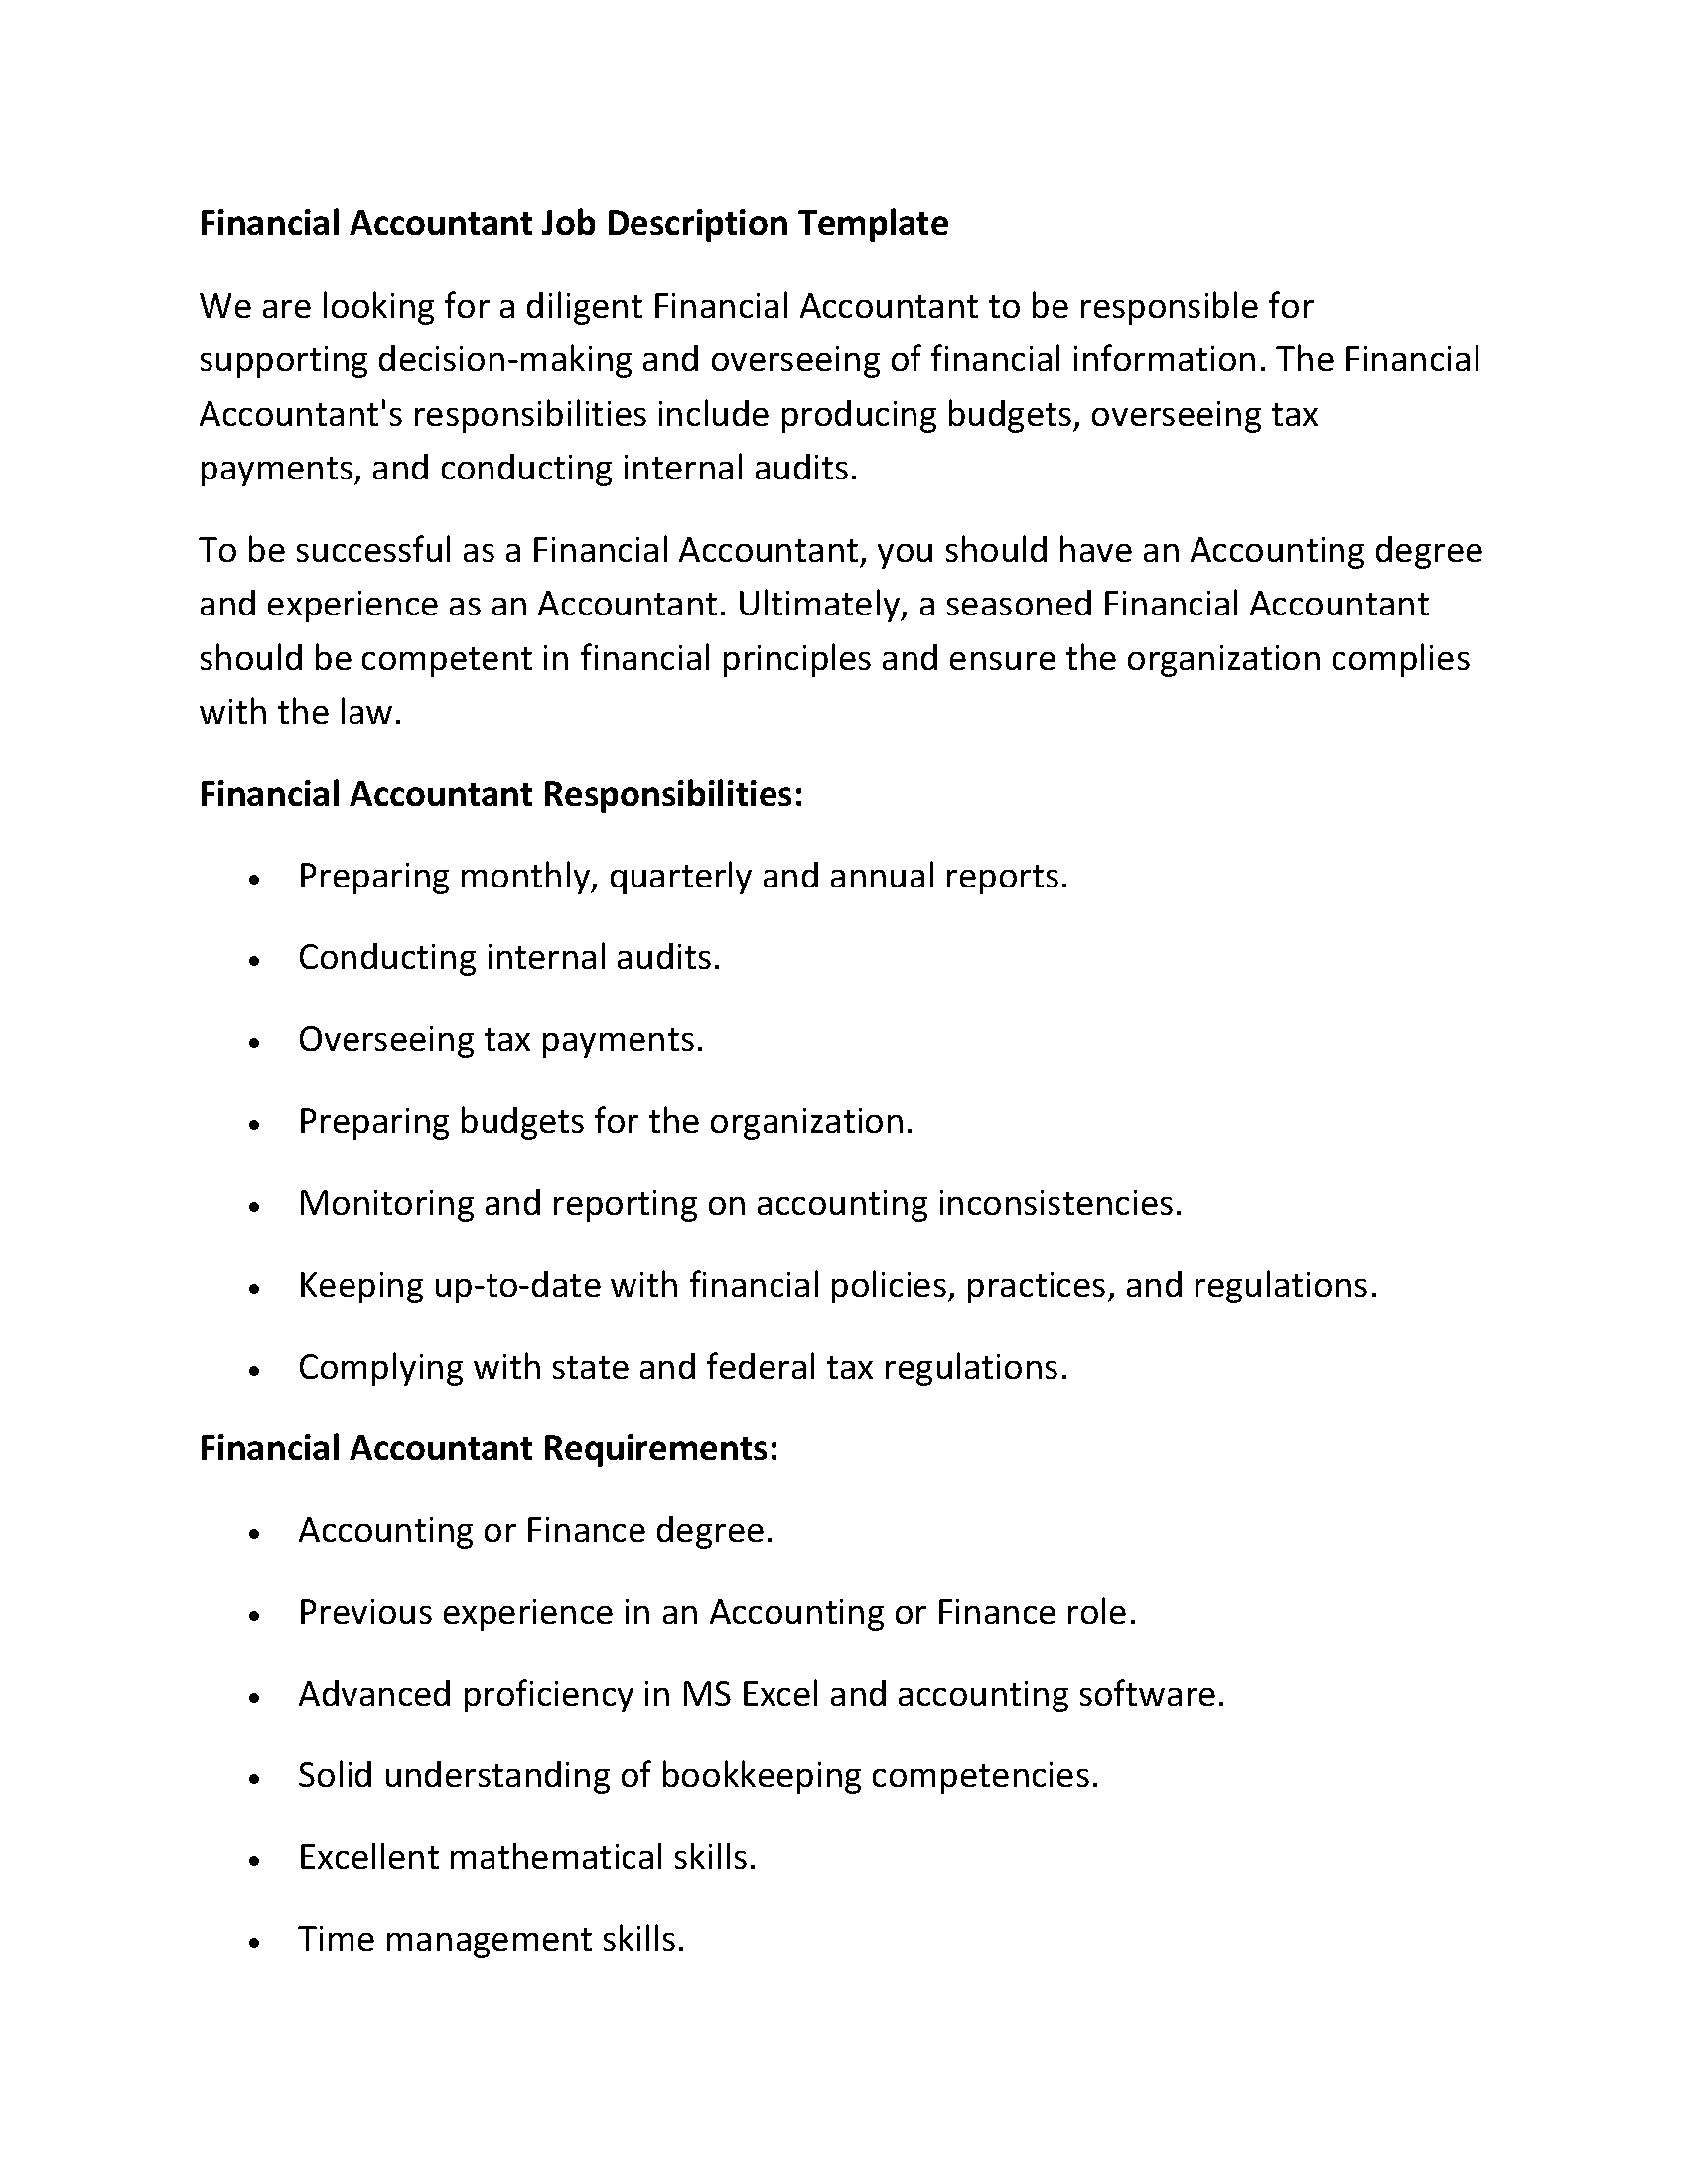 Financial Accountant Job Description Template